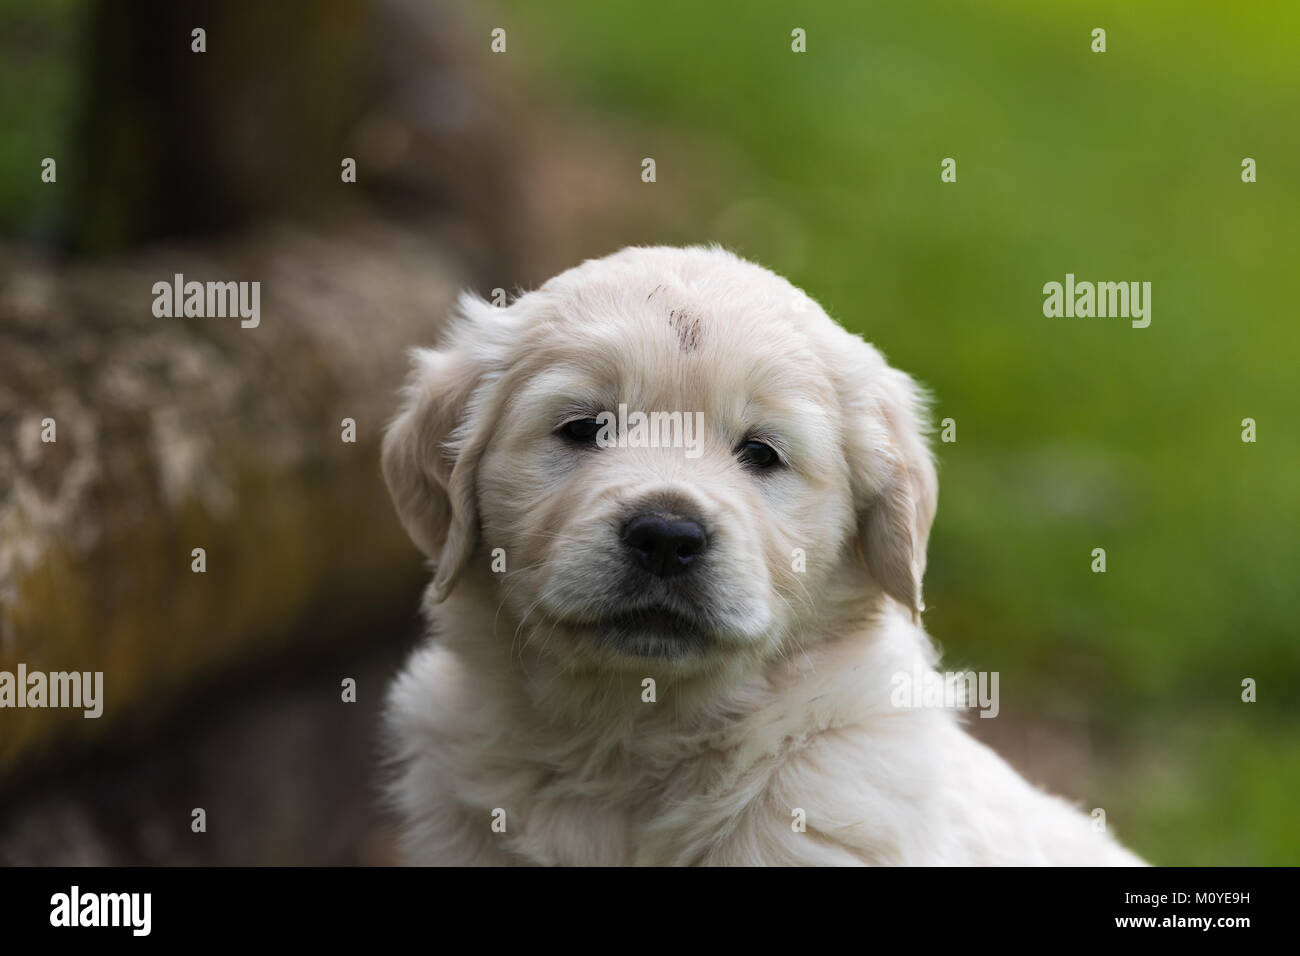 A portrait of a Golden Retriever puppy Stock Photo